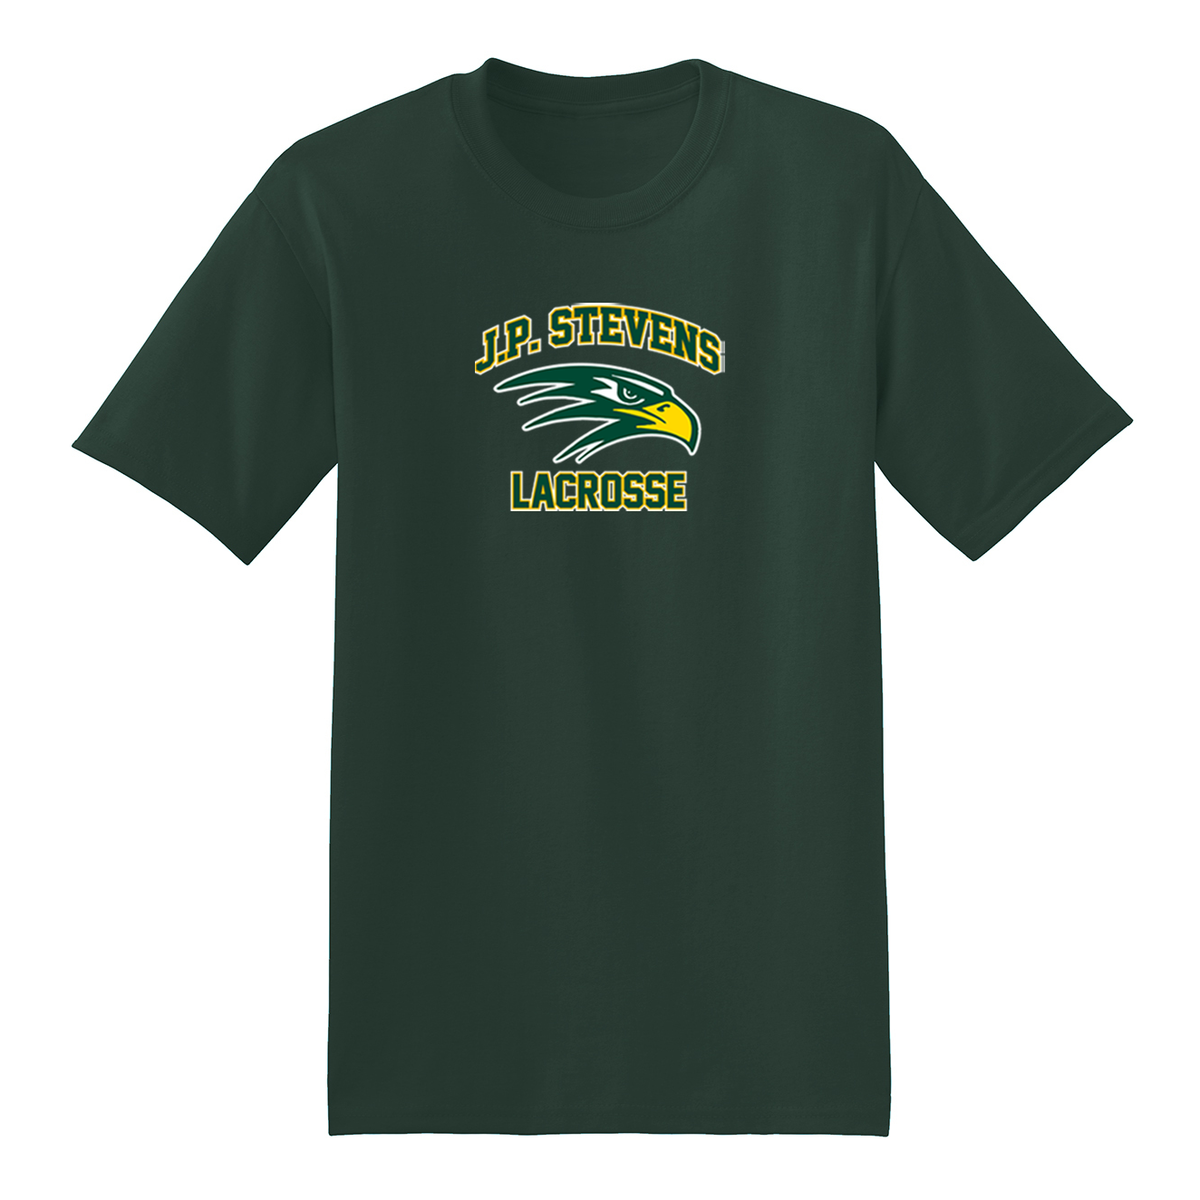 J.P. Stevens Lacrosse T-Shirt